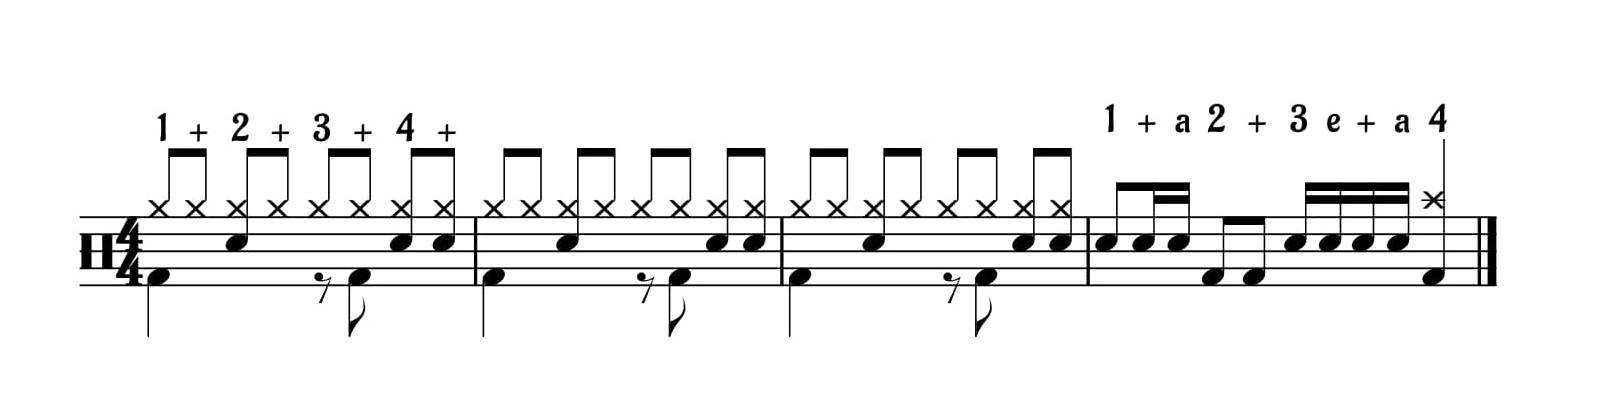 a four bar phrase in drum sheet music